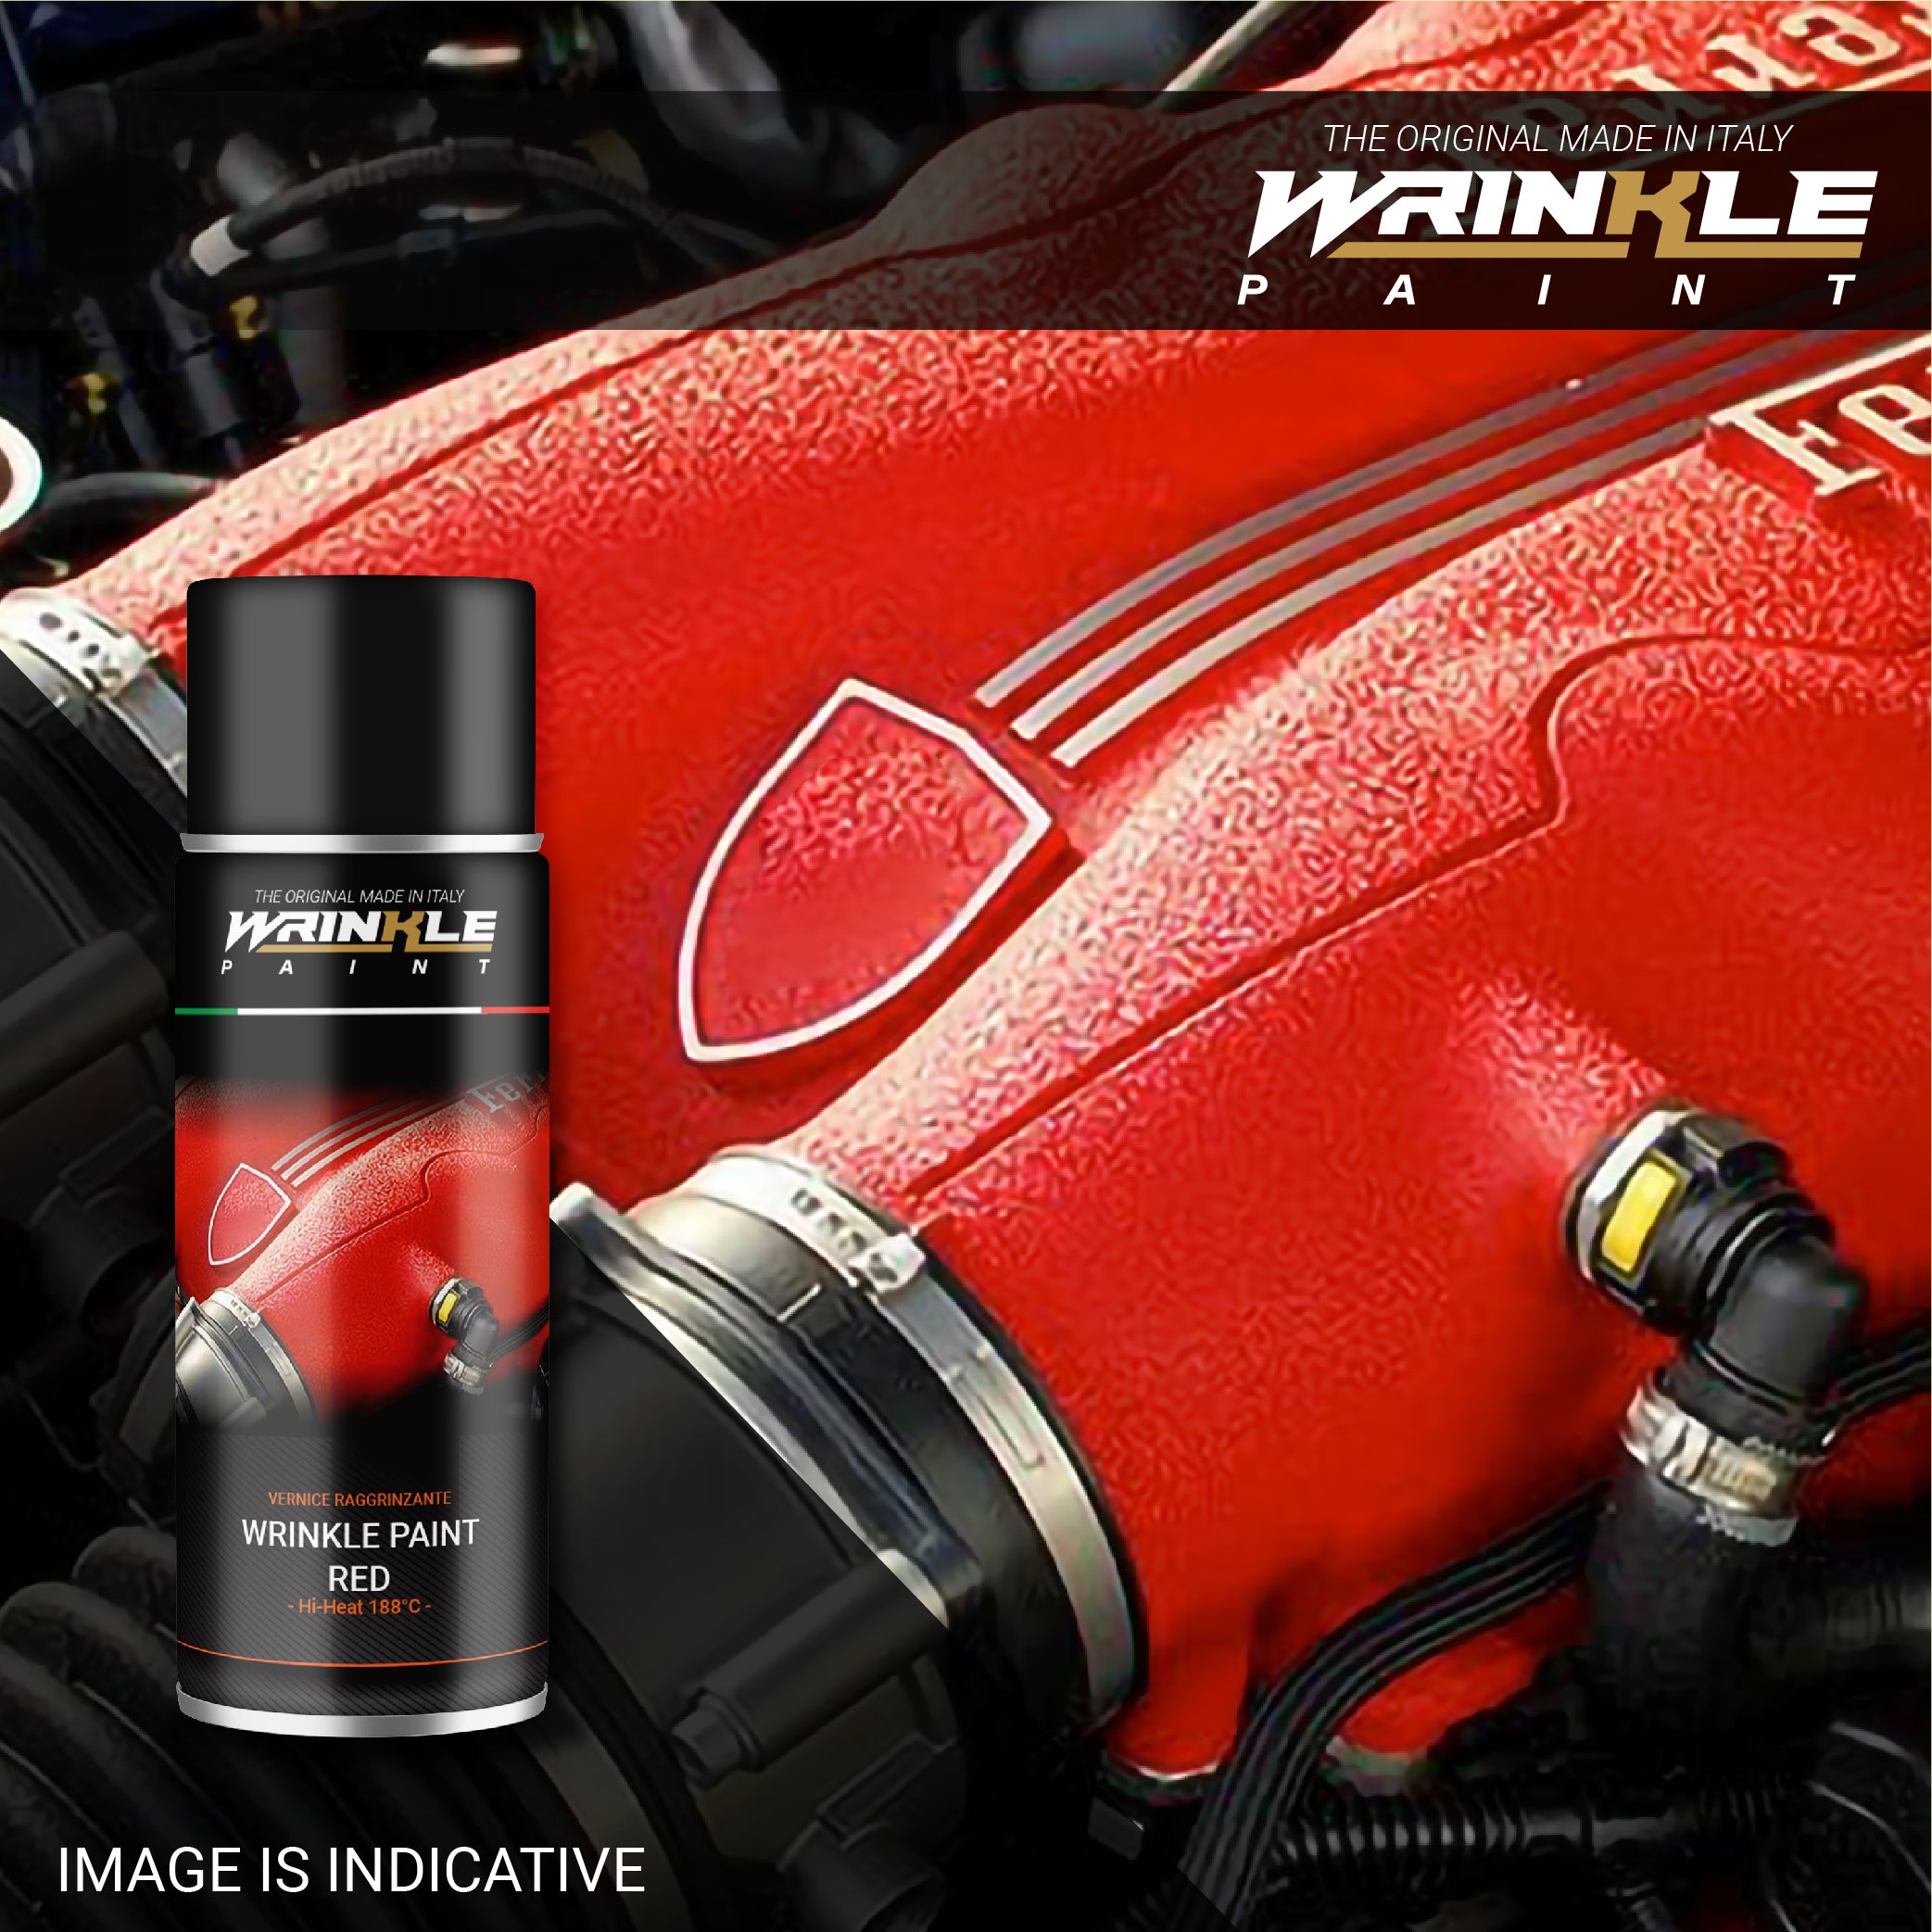 Wrinkle Paint Spray RED FERRARI Engine High Heat - 400 ml